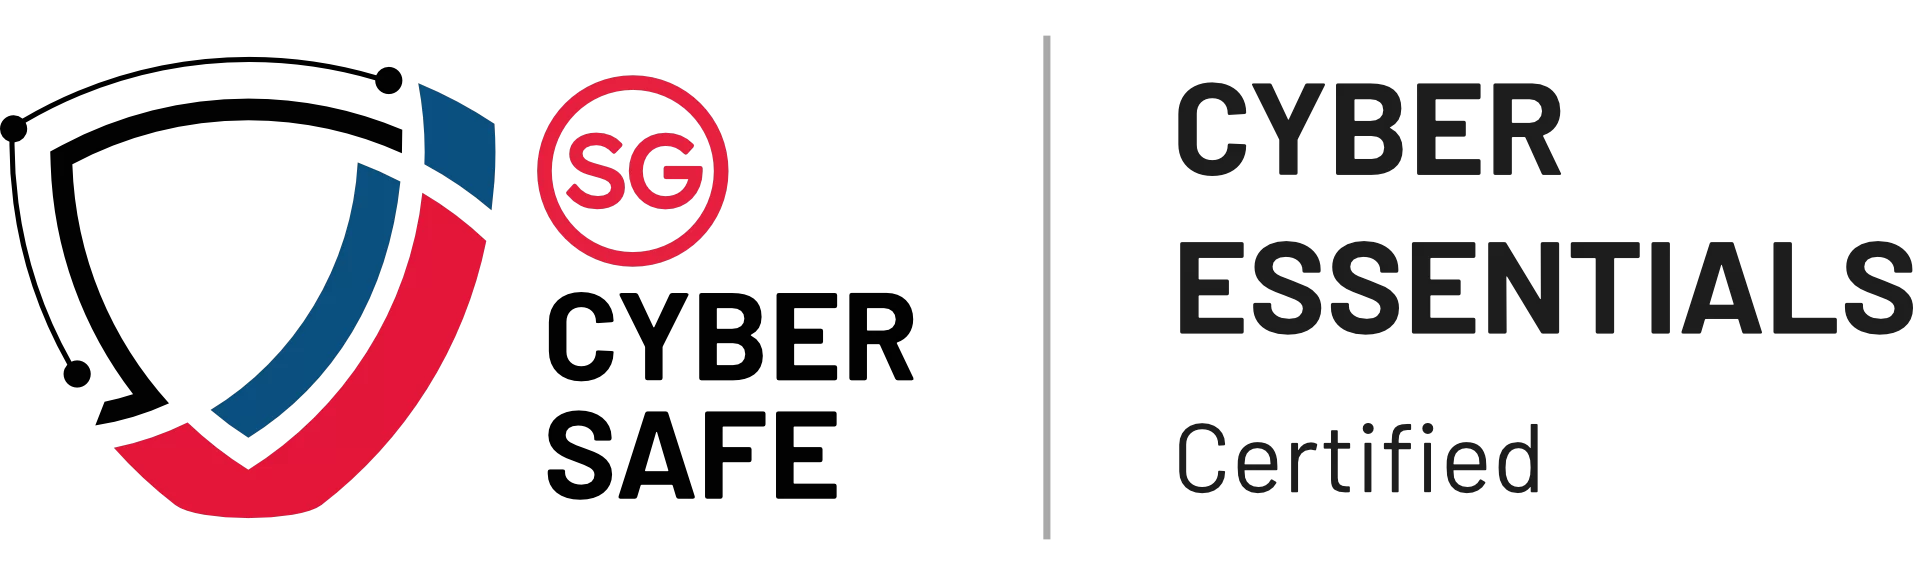 CSA Cyber Essentials Certified